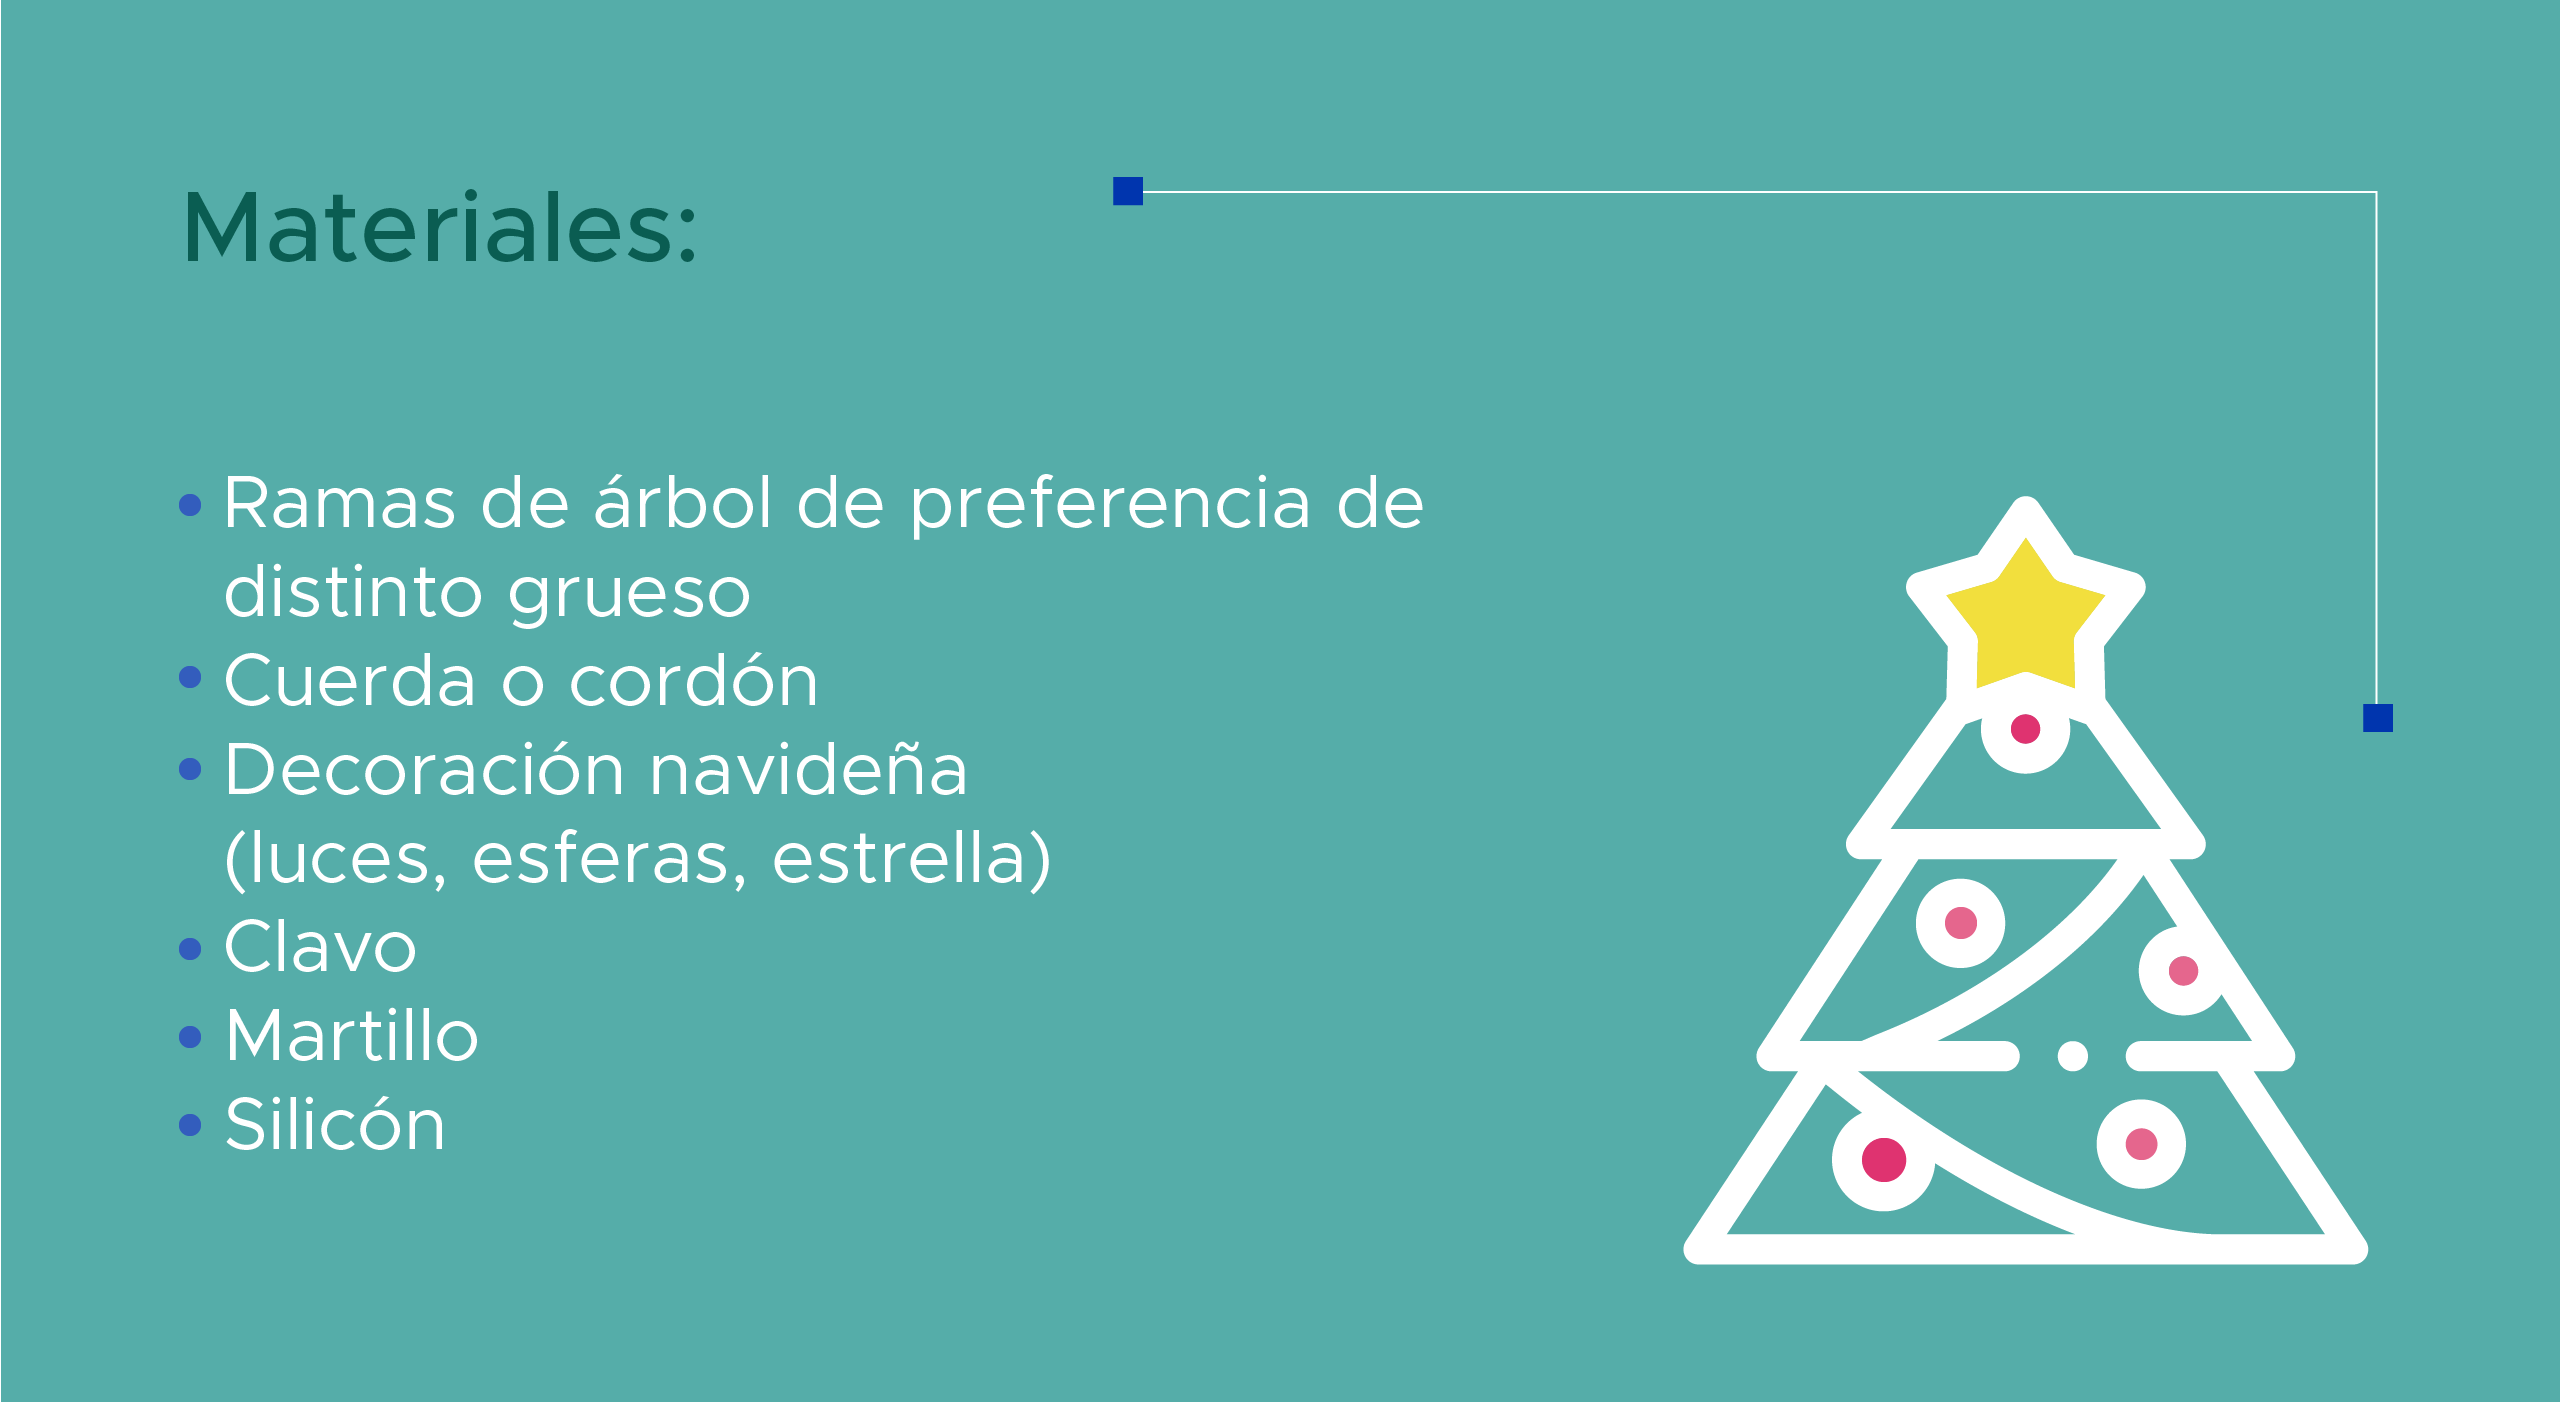 Materiales: Ramas de árbol de preferencia de distinto grueso. Cuerda o cordón. Decoración navideña (luces, esferas, estrella). Clavo. Martillo. Silicón